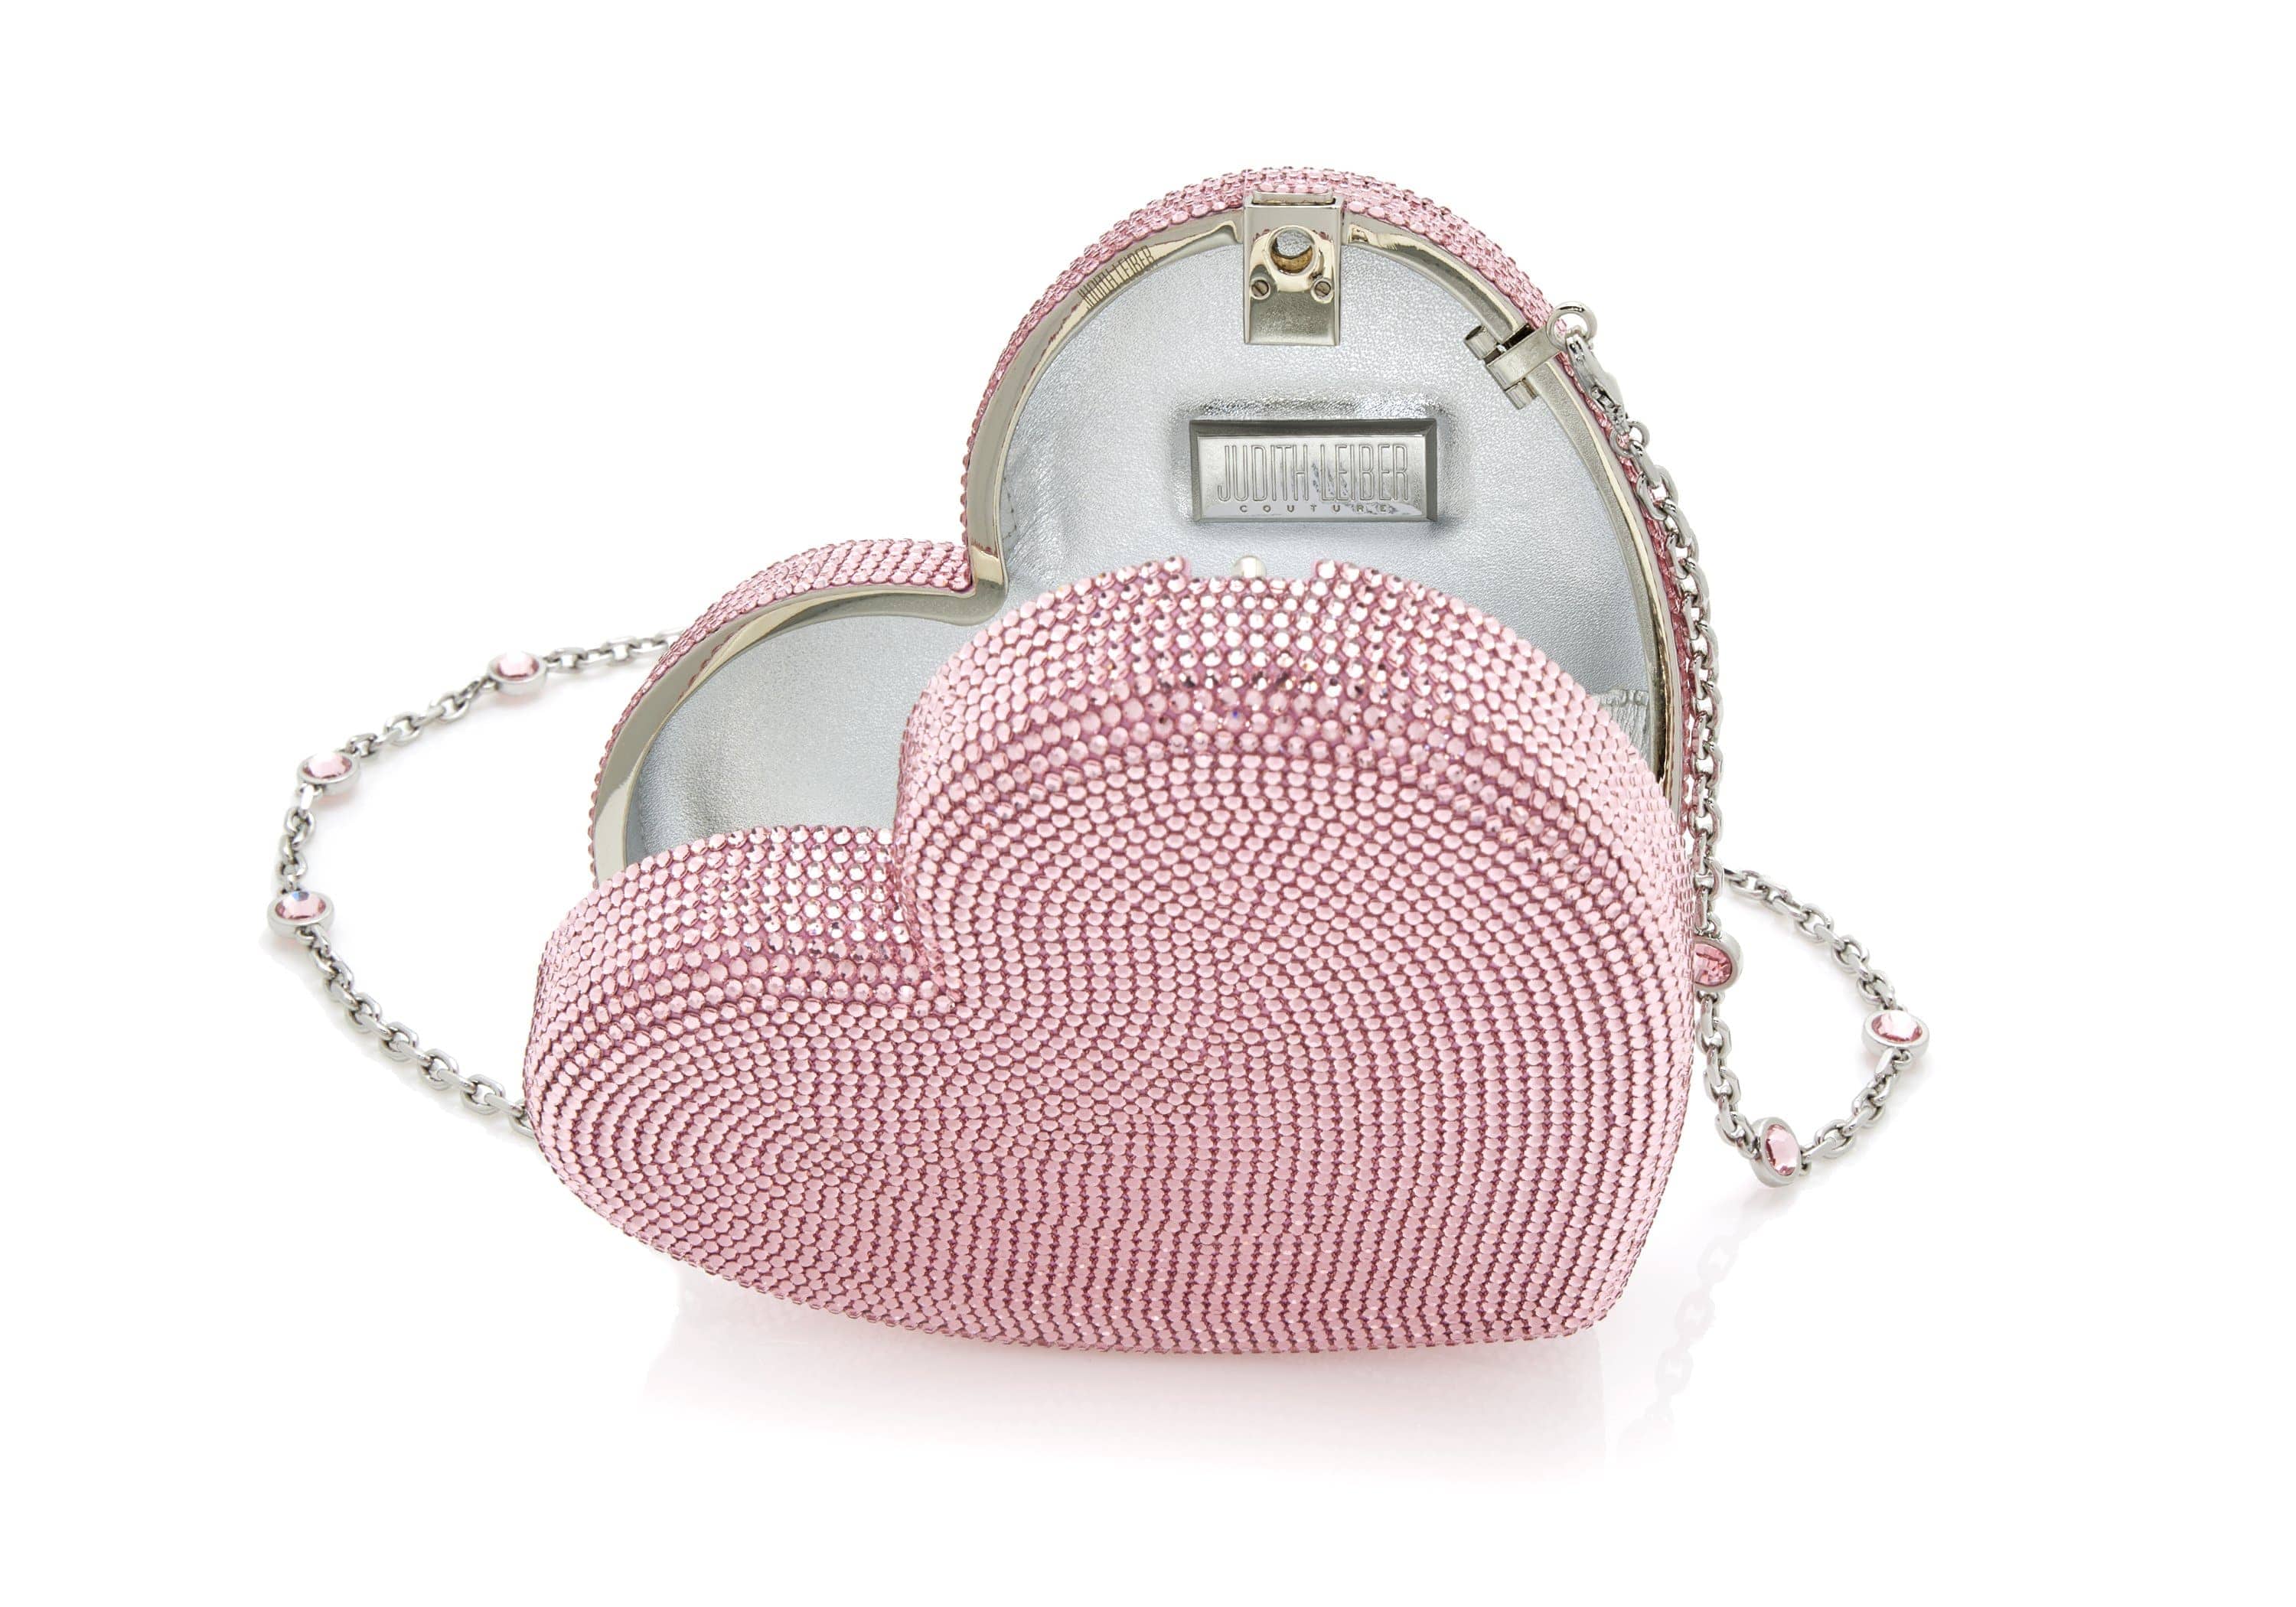 Shop Novelty Shaped Handbags, Bags, Purses: Triangle, Heart